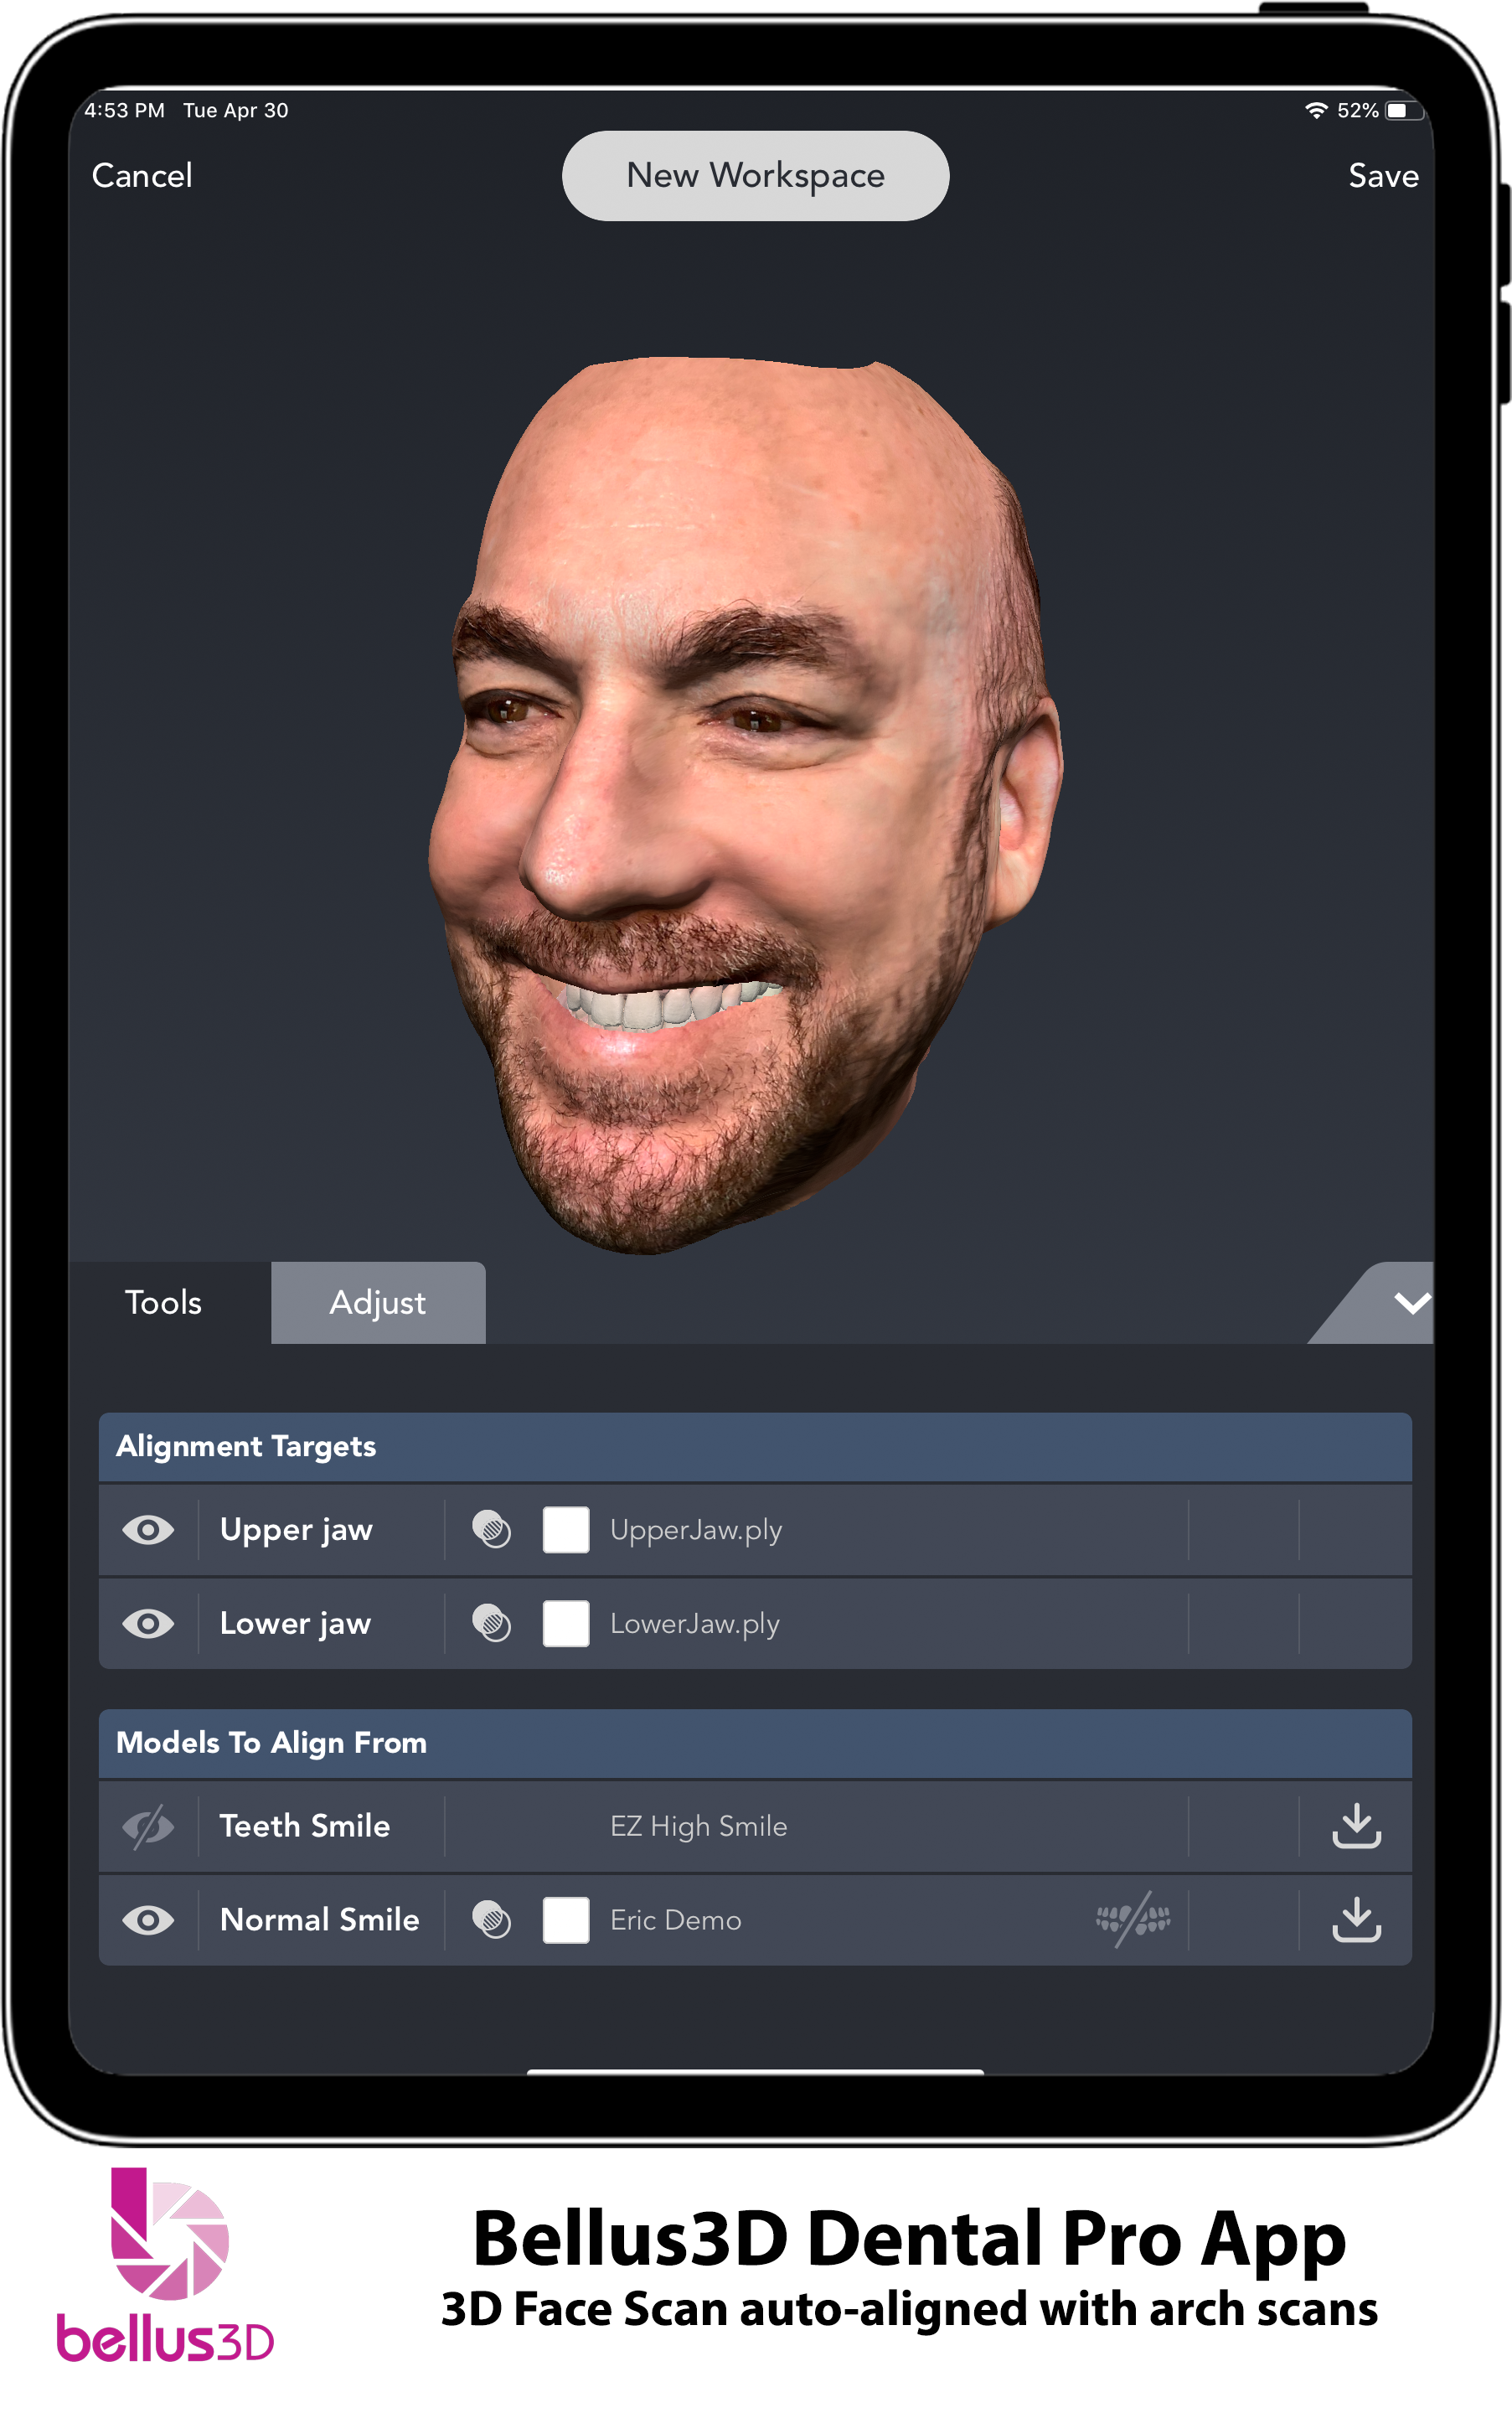 Bellus3D Dental Pro App with Dental Scan Alignment